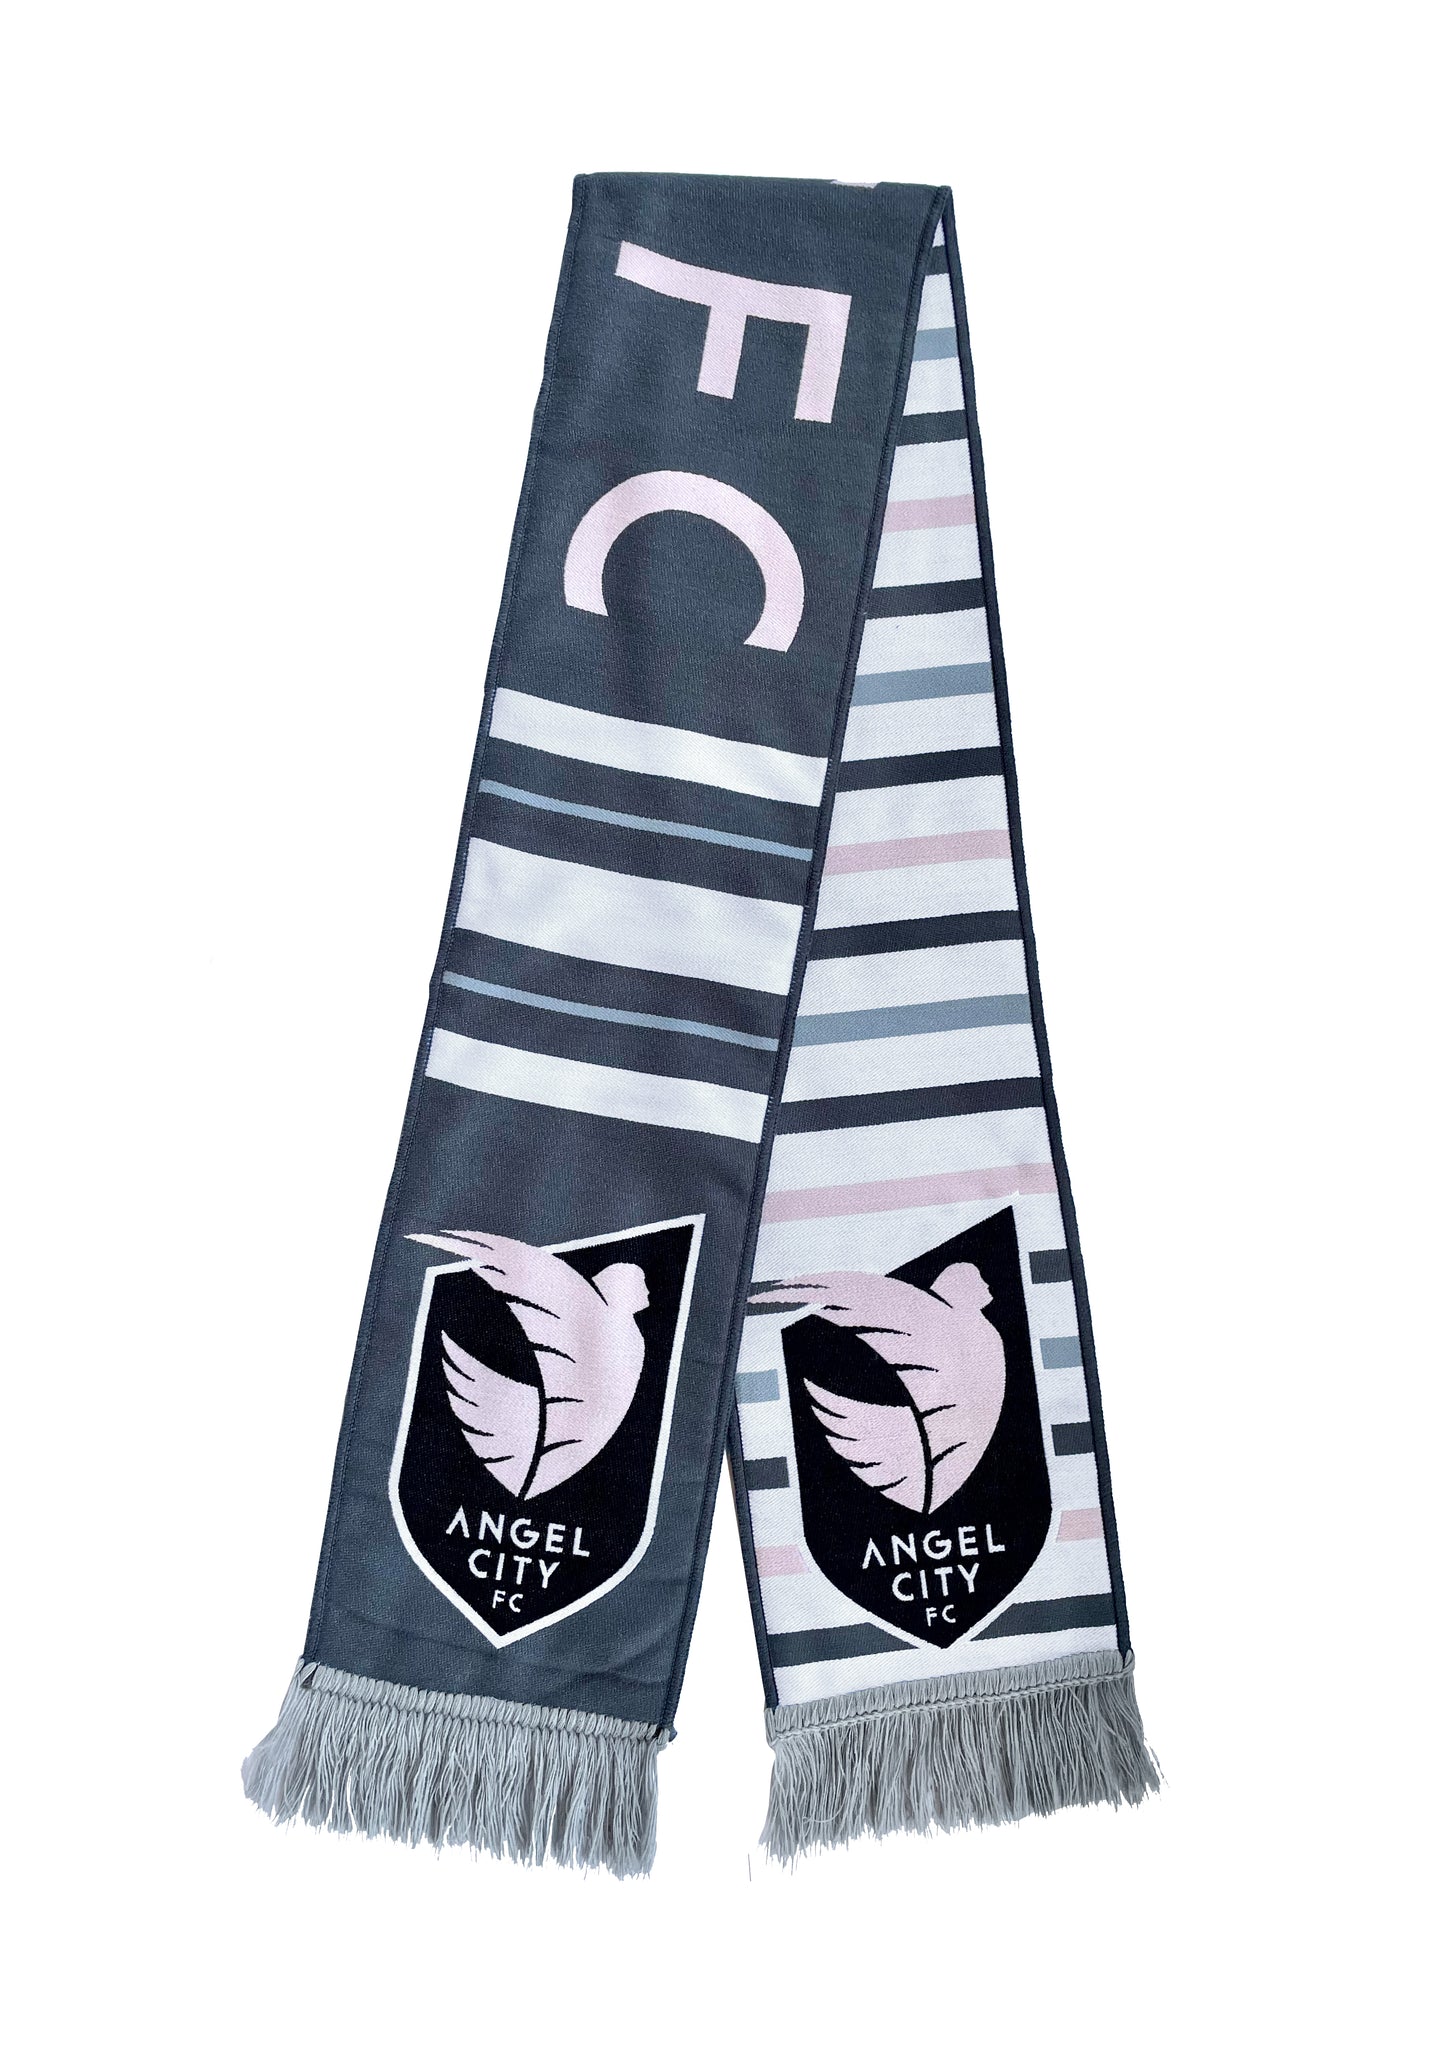 Angel City FC ACFC Bufanda tejida a rayas con marca denominativa